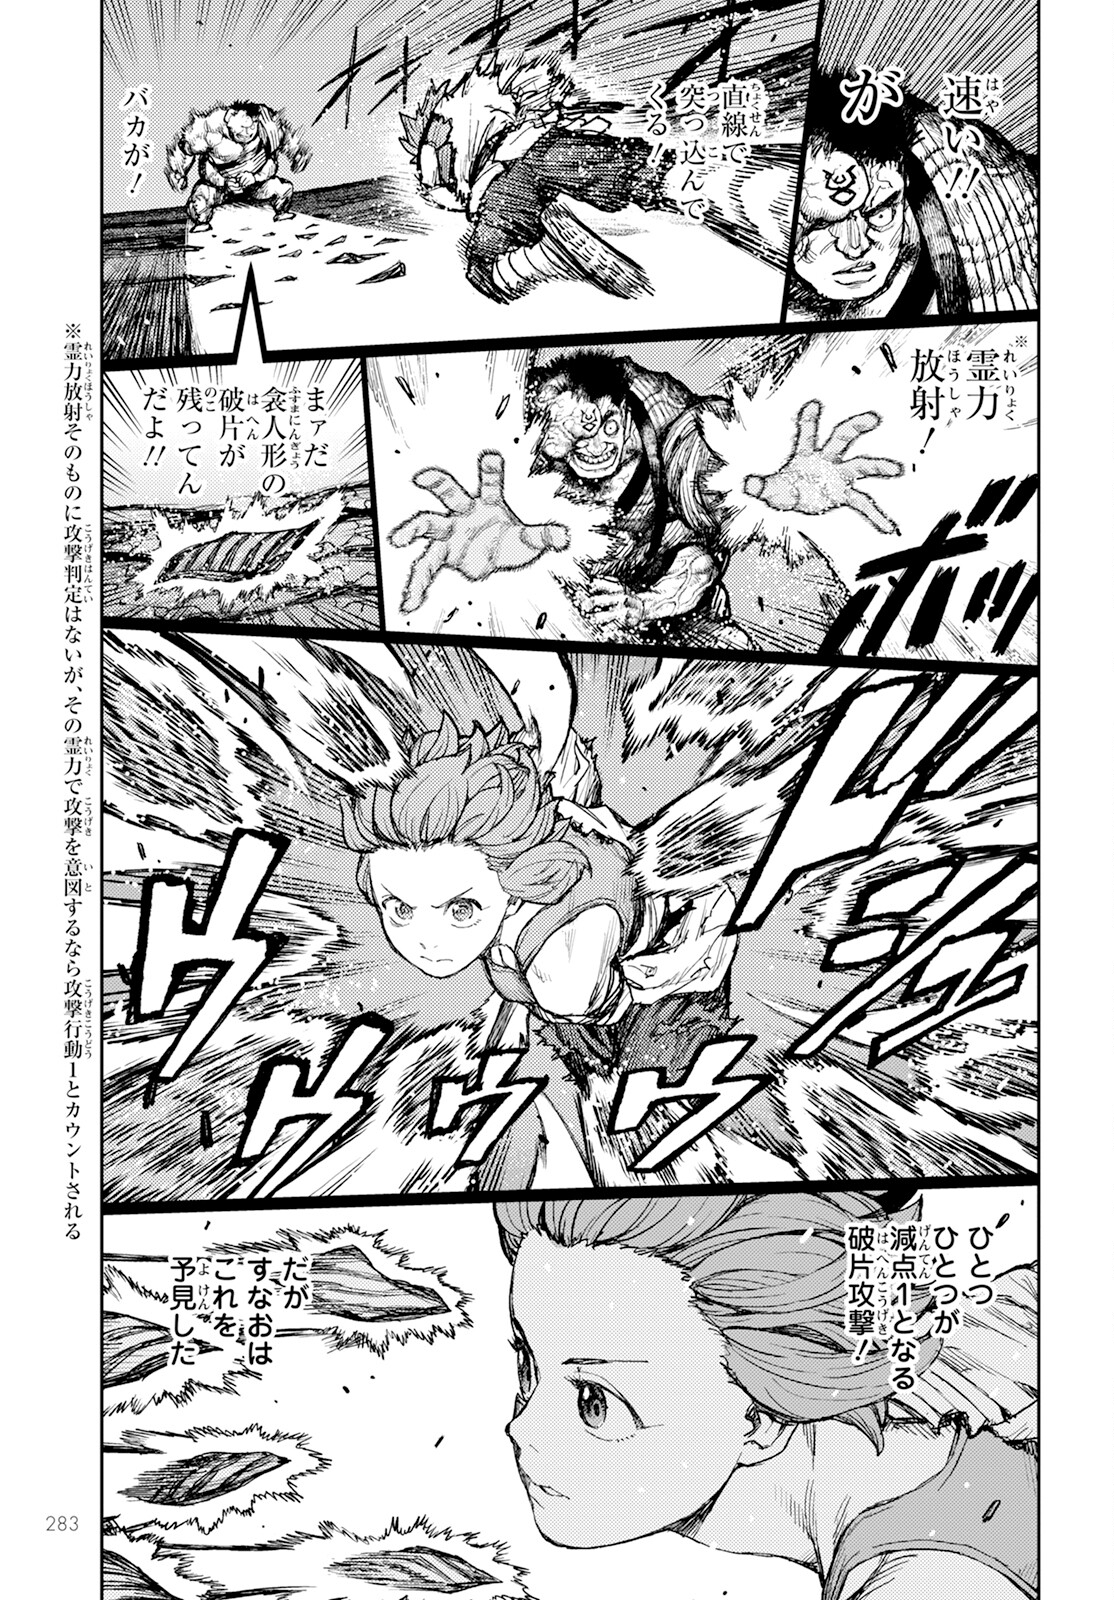 Tsugumomo - Chapter 165 - Page 3